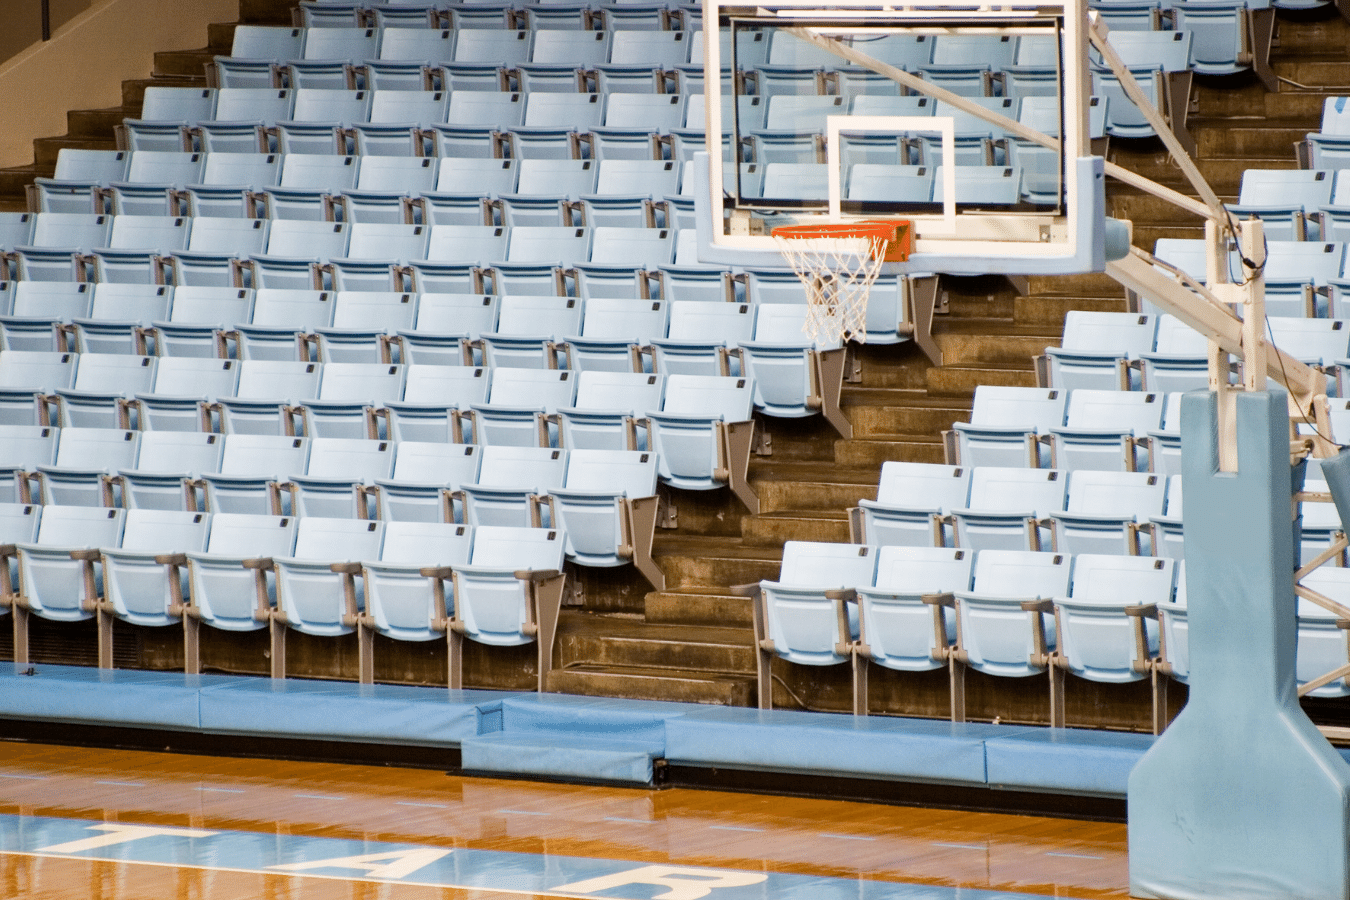 Catch a basketball game at the University of North Carolina Chapel Hill - UNC Tarheels